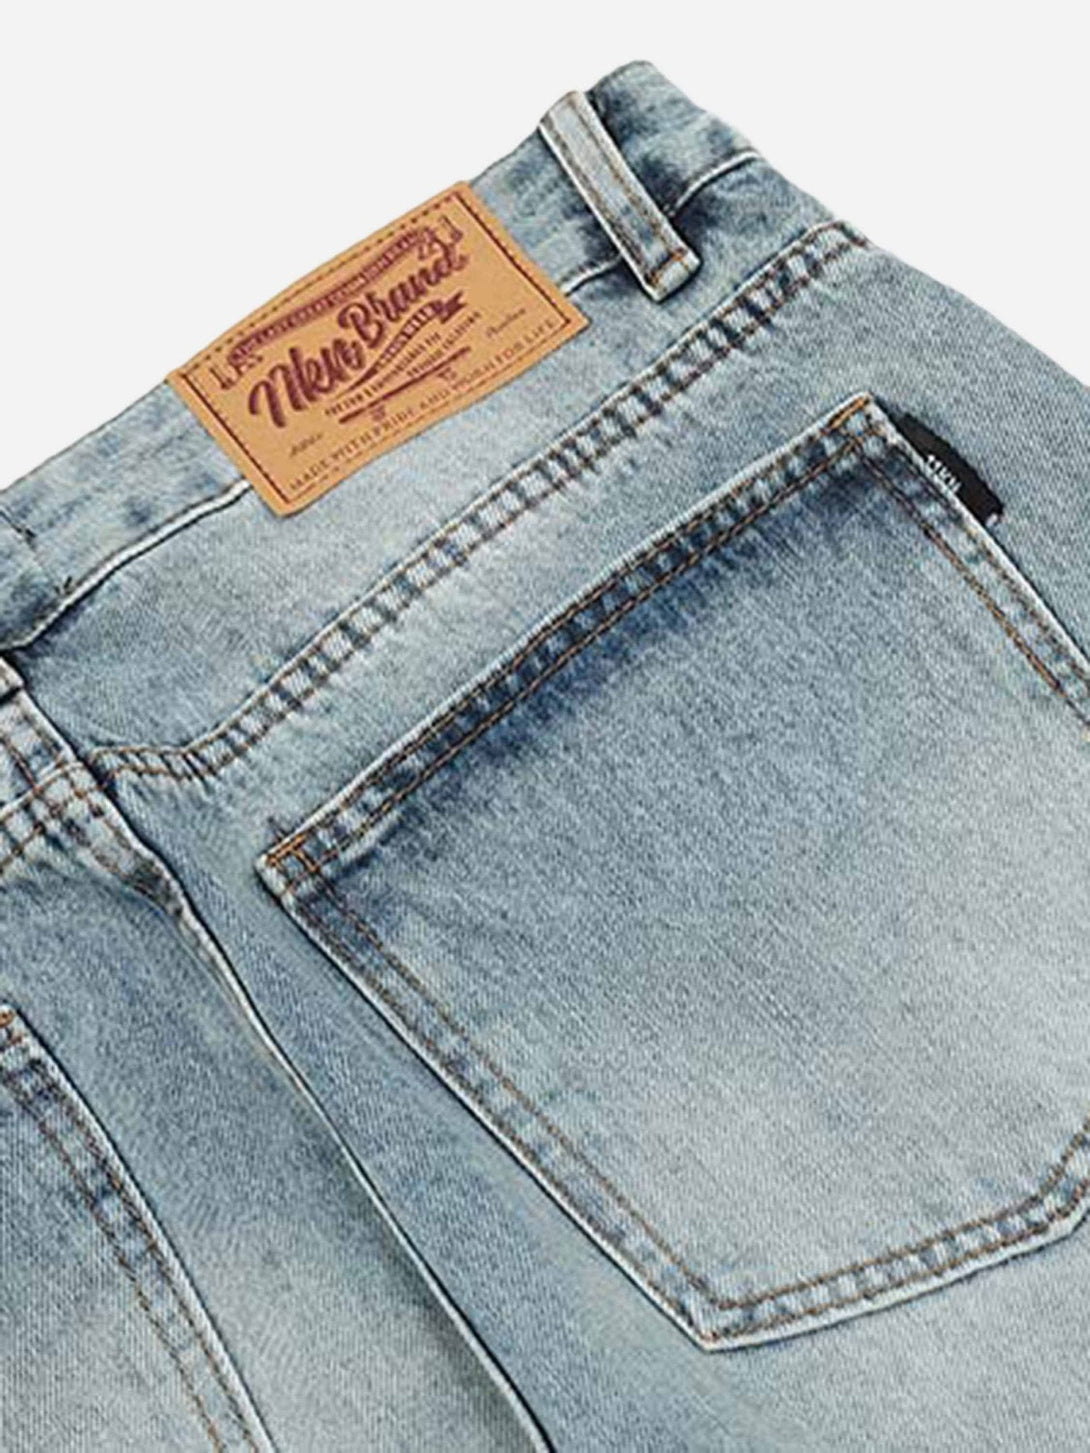 Majesda® - High Street Ripped Micro Flare Jeans- Outfit Ideas - Streetwear Fashion - majesda.com